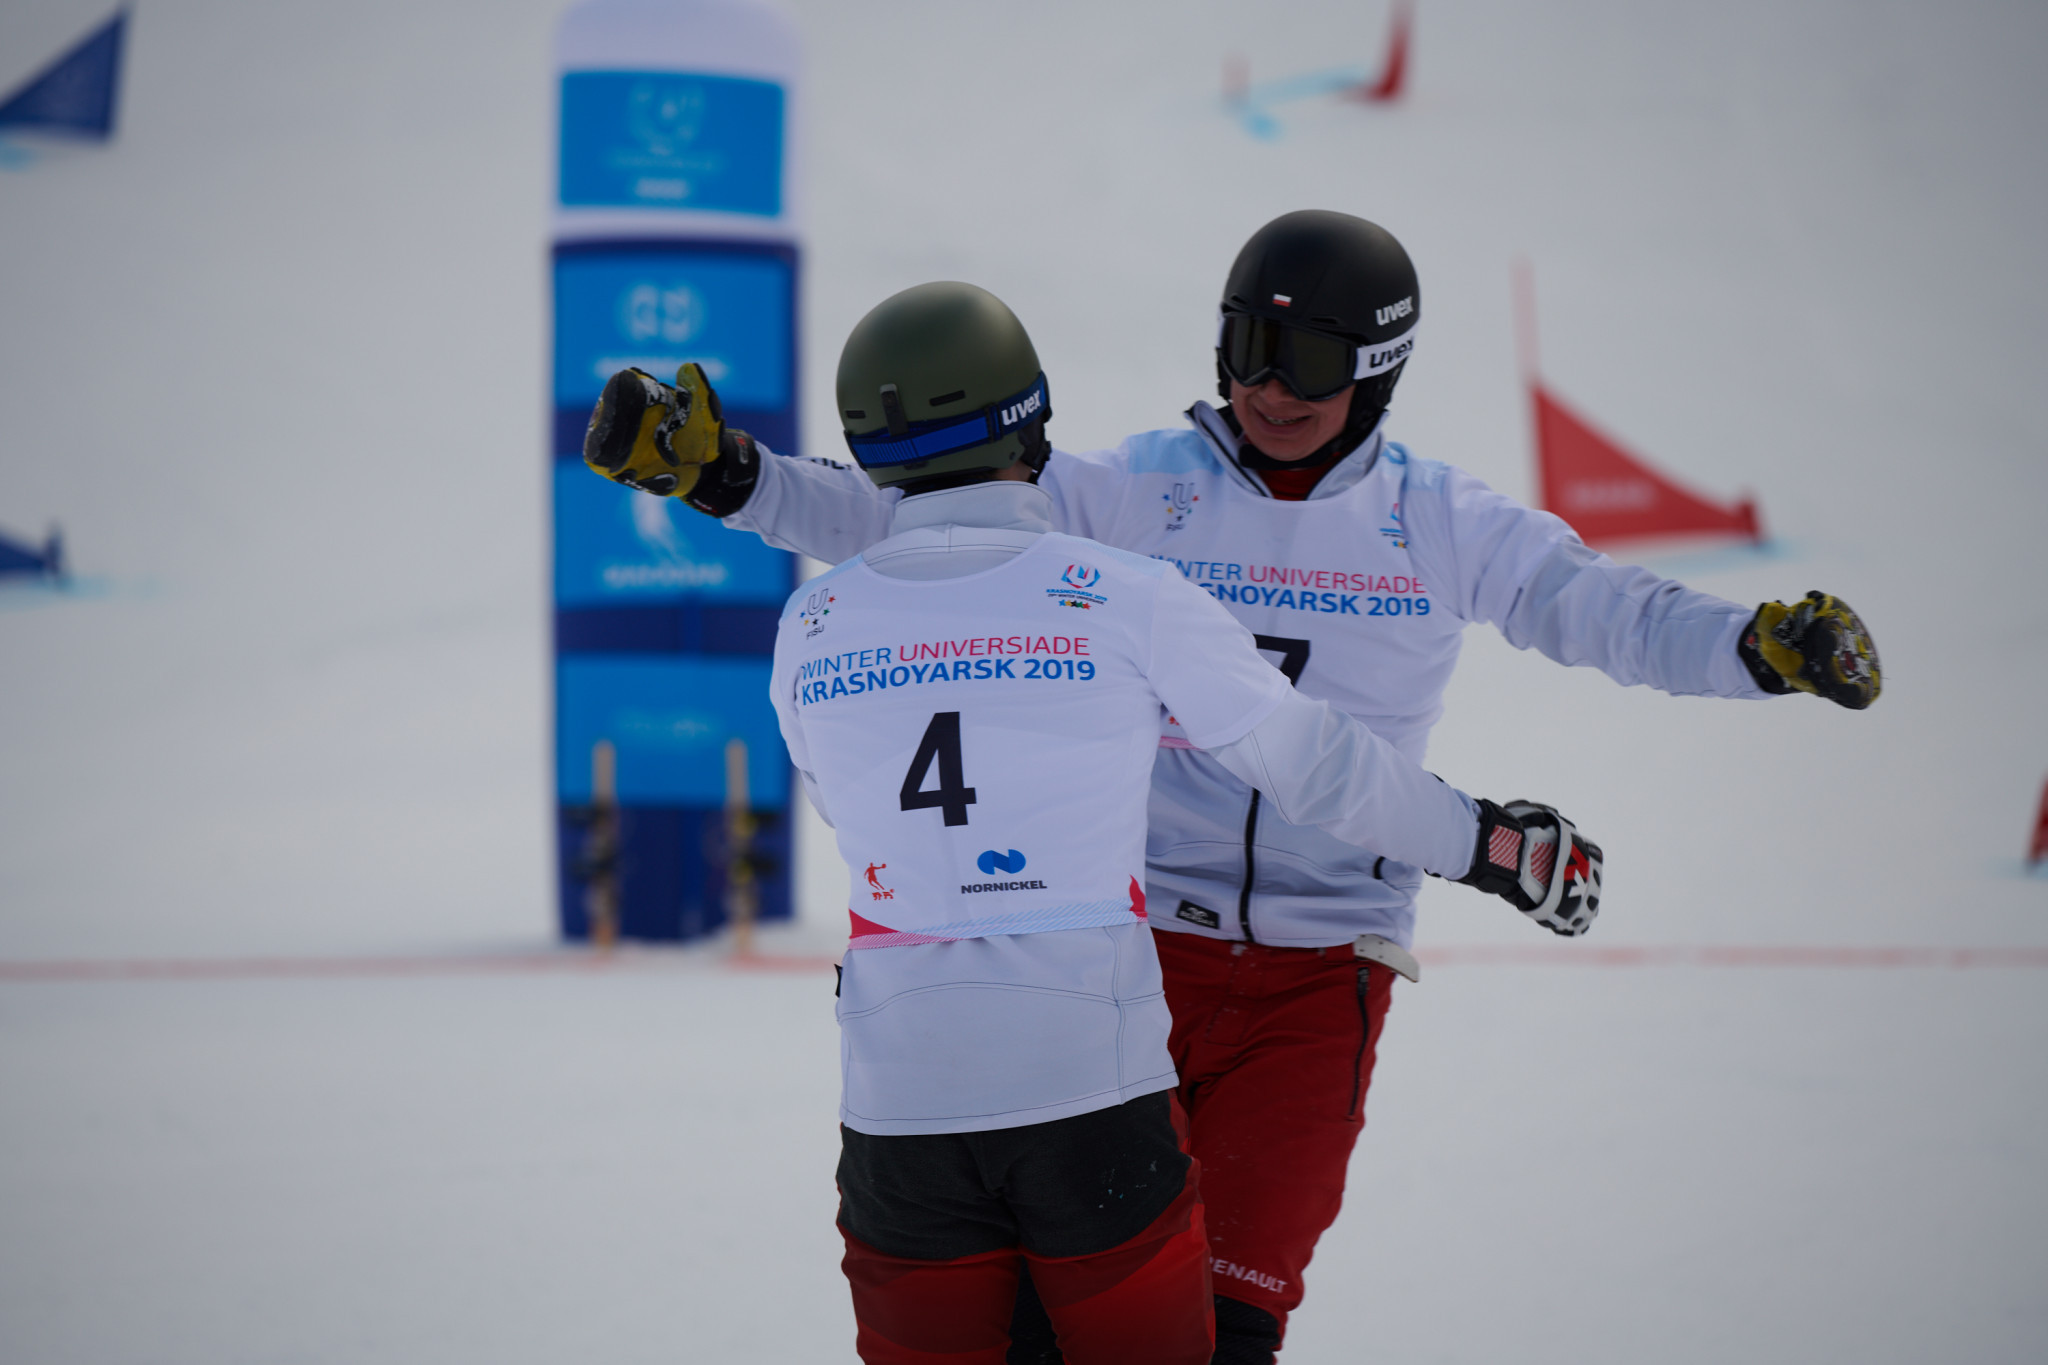 Michal Nowaczyk and Oskar Kwiatowski competed in an all-Polish parallel slalom snowboard final, with Nowaczyk emerging victorious ©Krasnoyarsk 2019